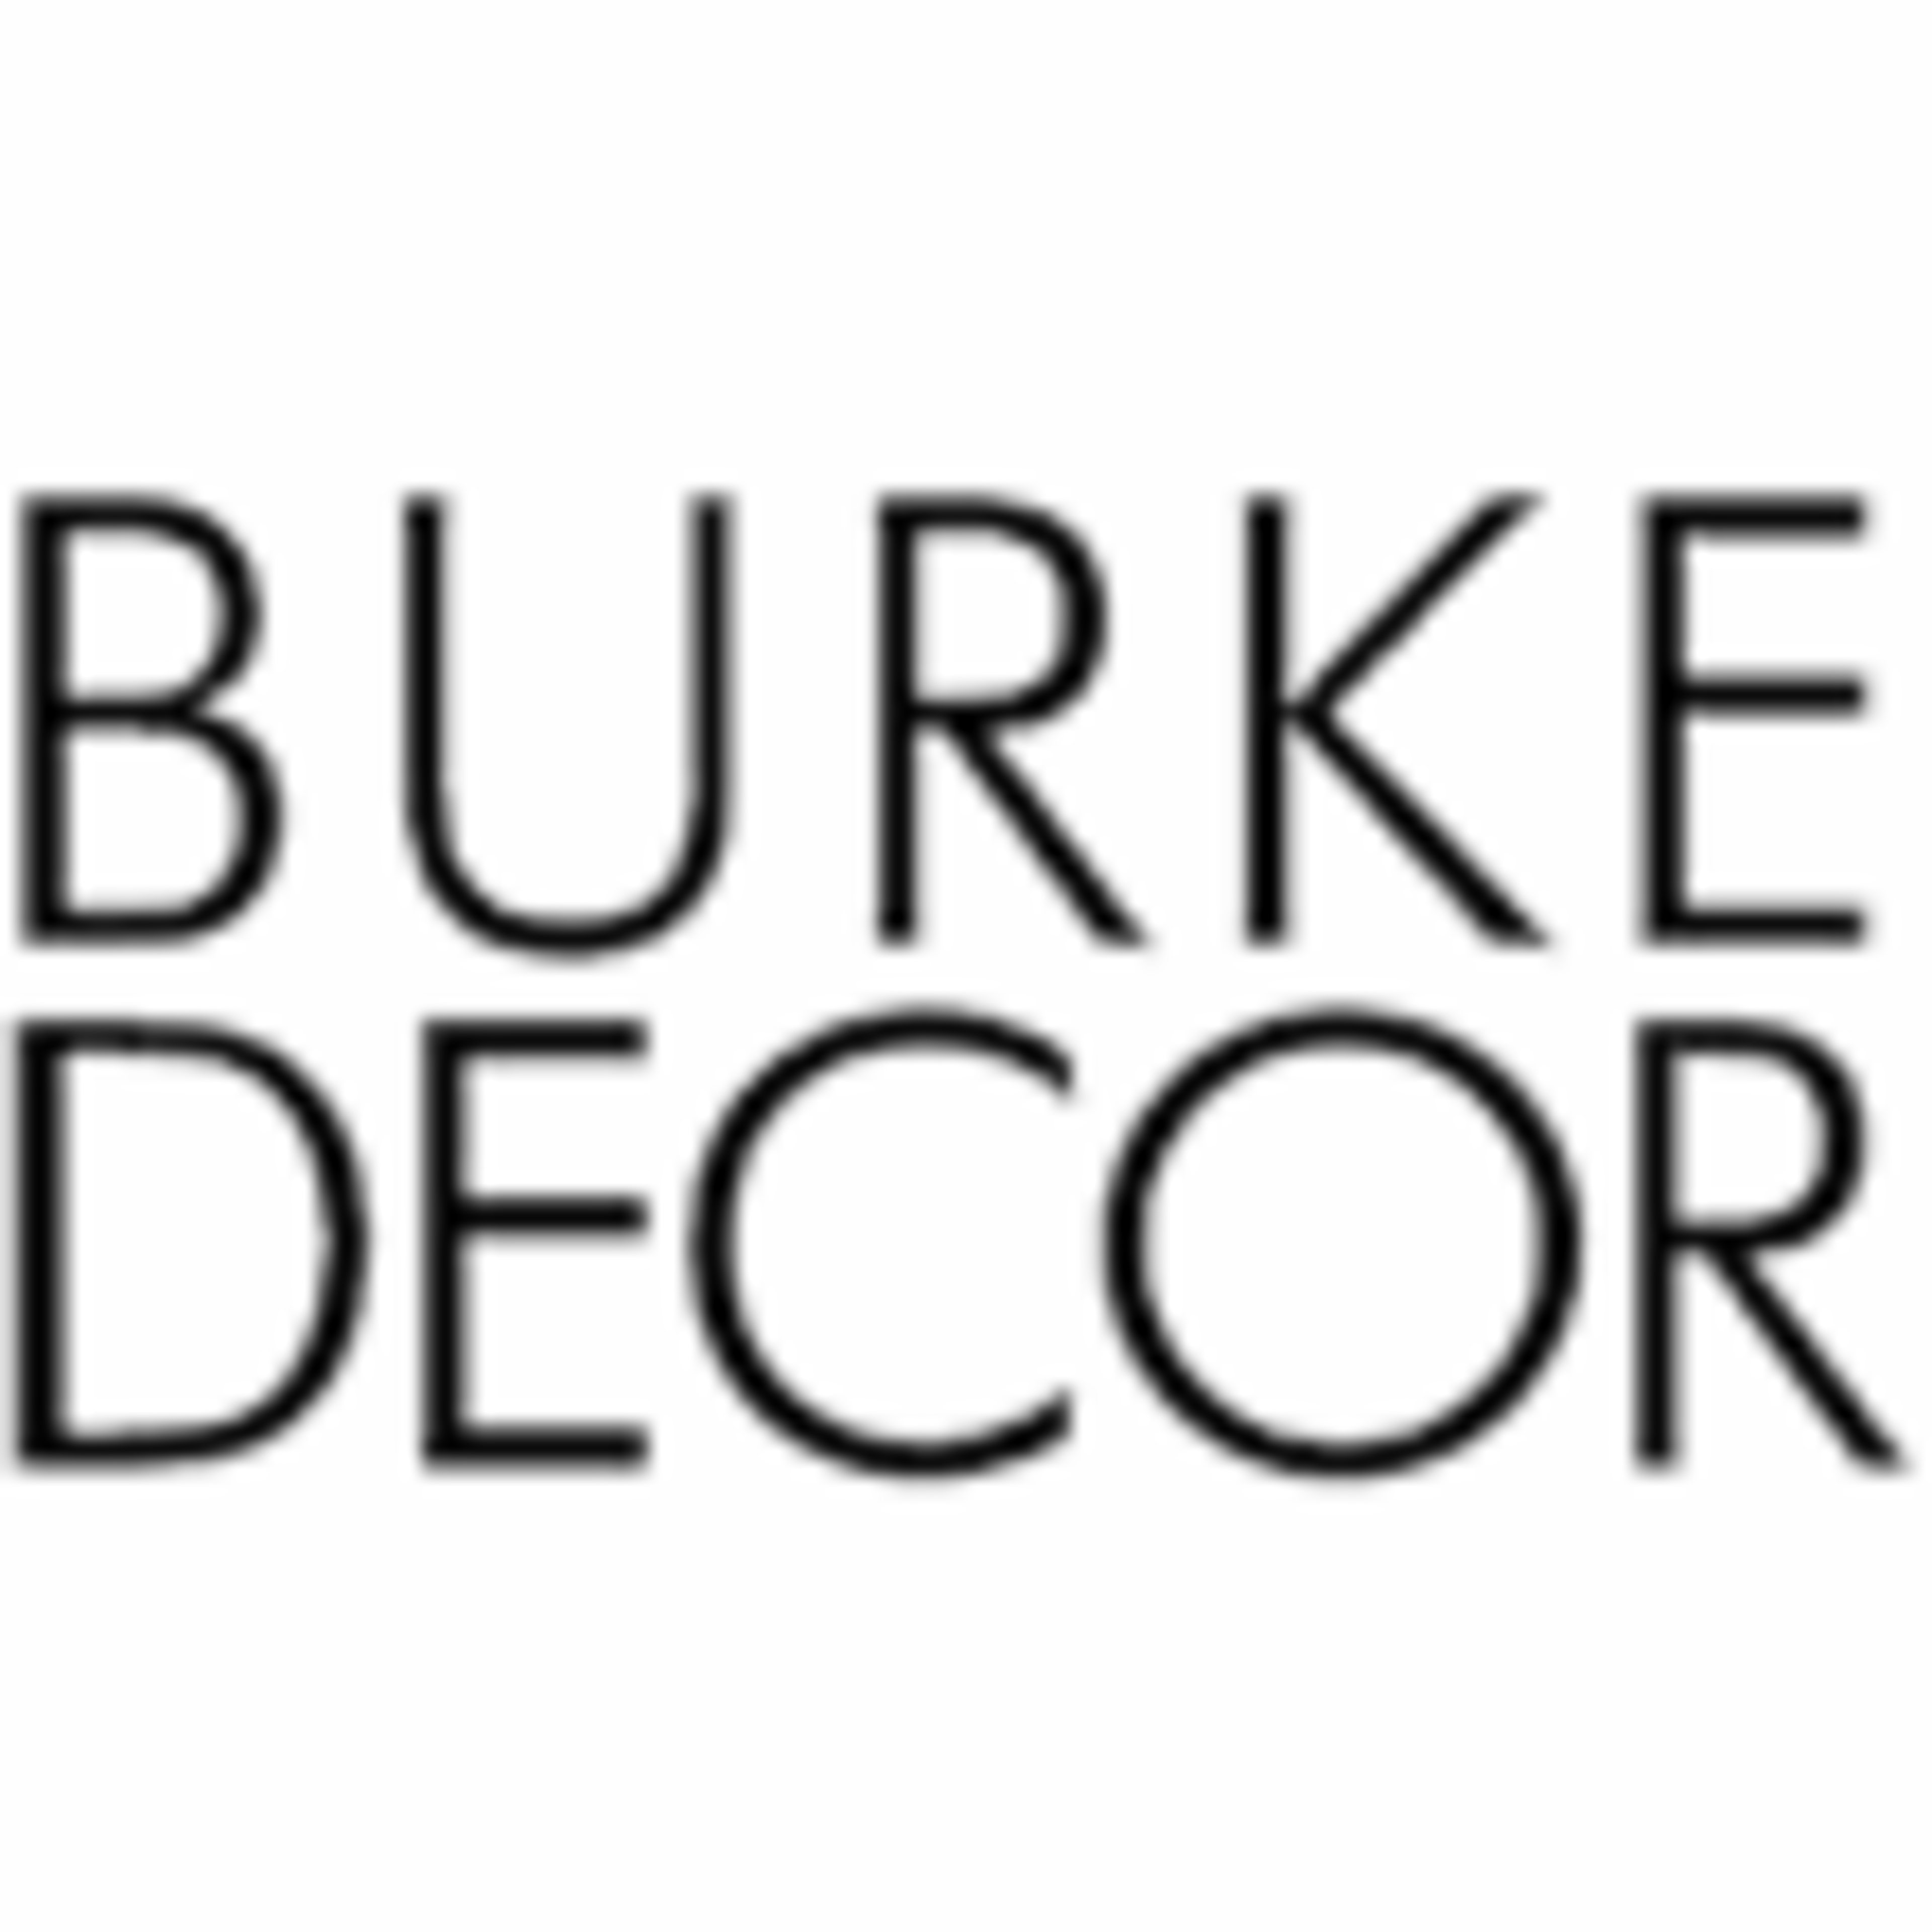 Burke DecorCode